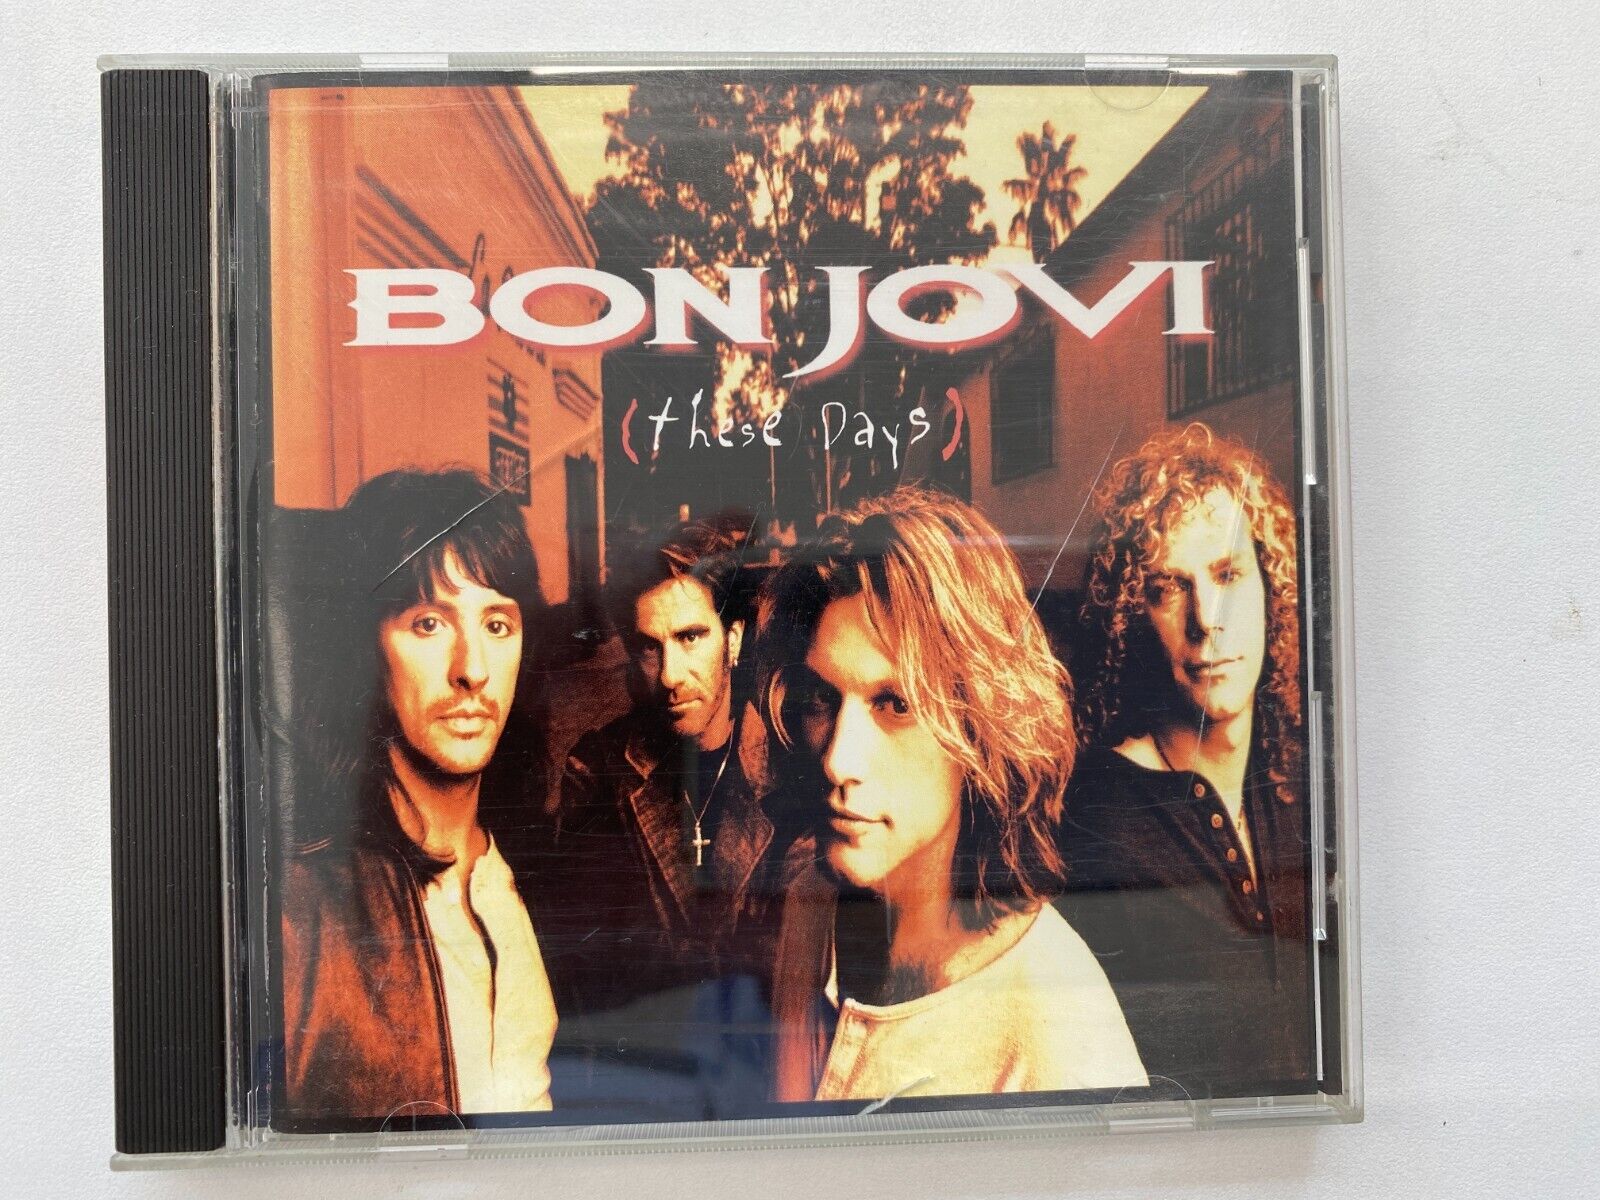 Bon Jovi - These Days CD